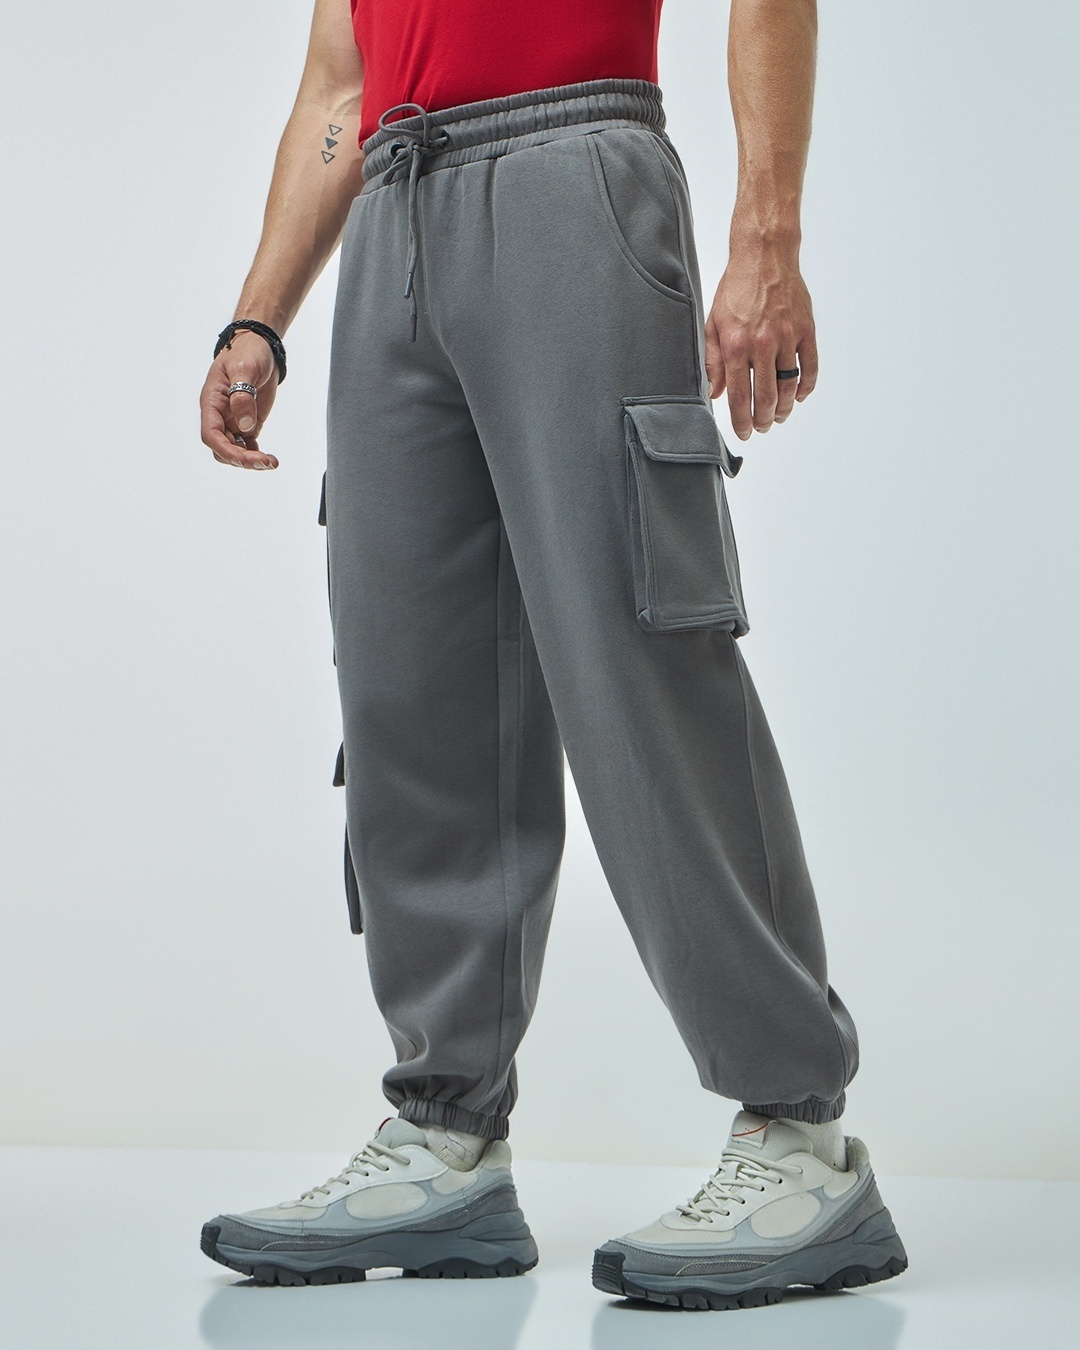 Men Plus Size Loose Cargo Trousers Work Pants Casual Baggy Hip Hop Pockets  L-7XL | eBay